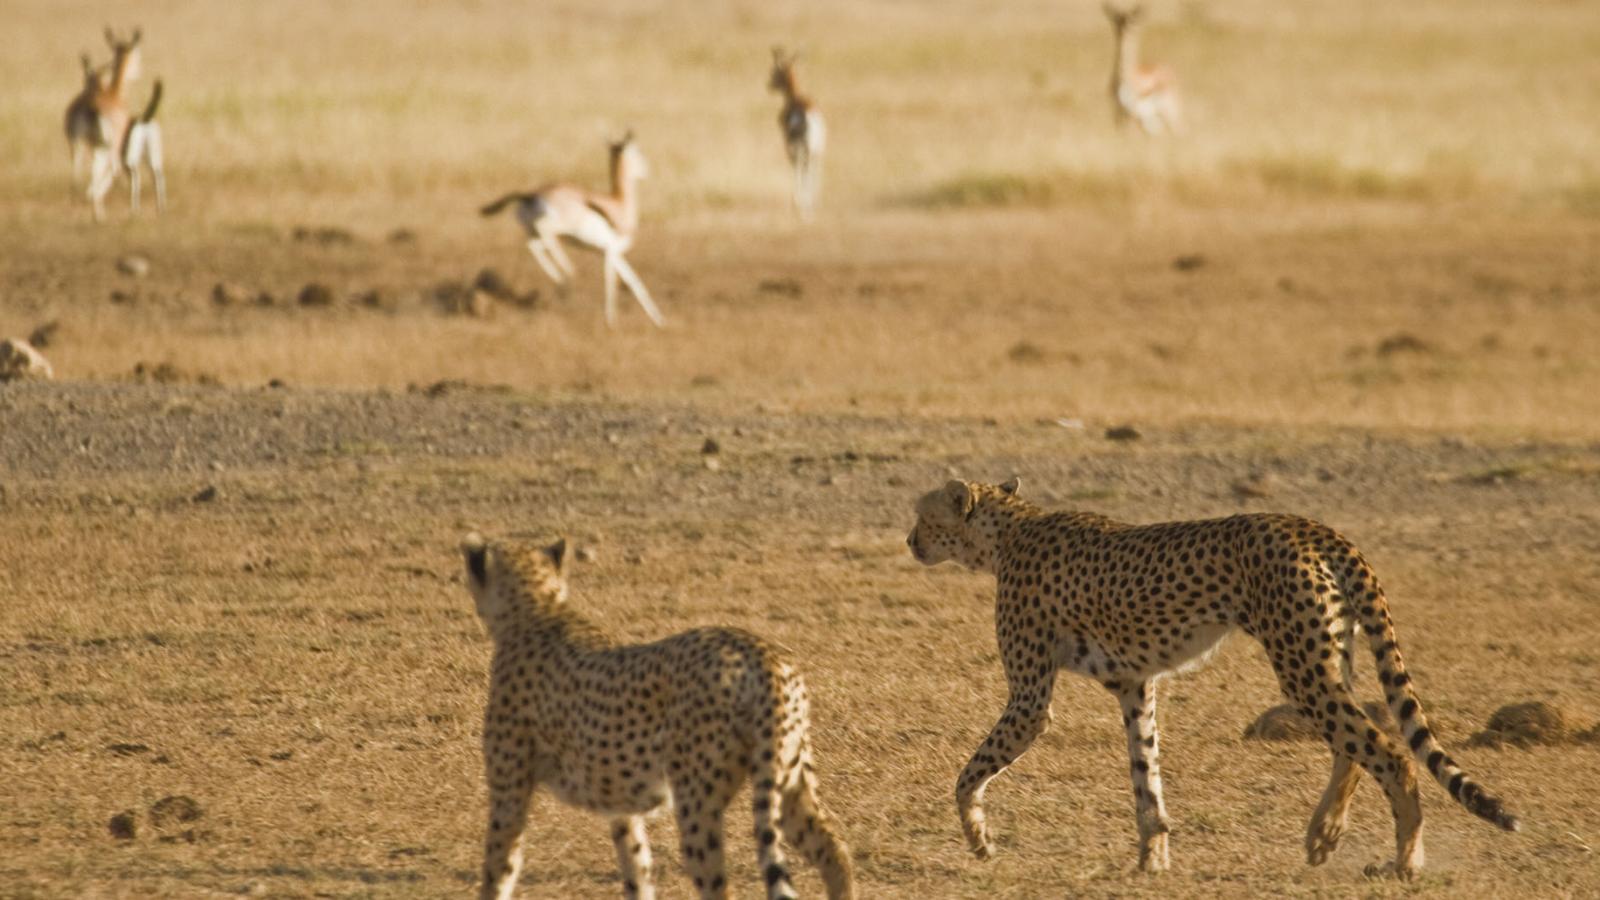 Cheetah action in Amboseli, Kenya